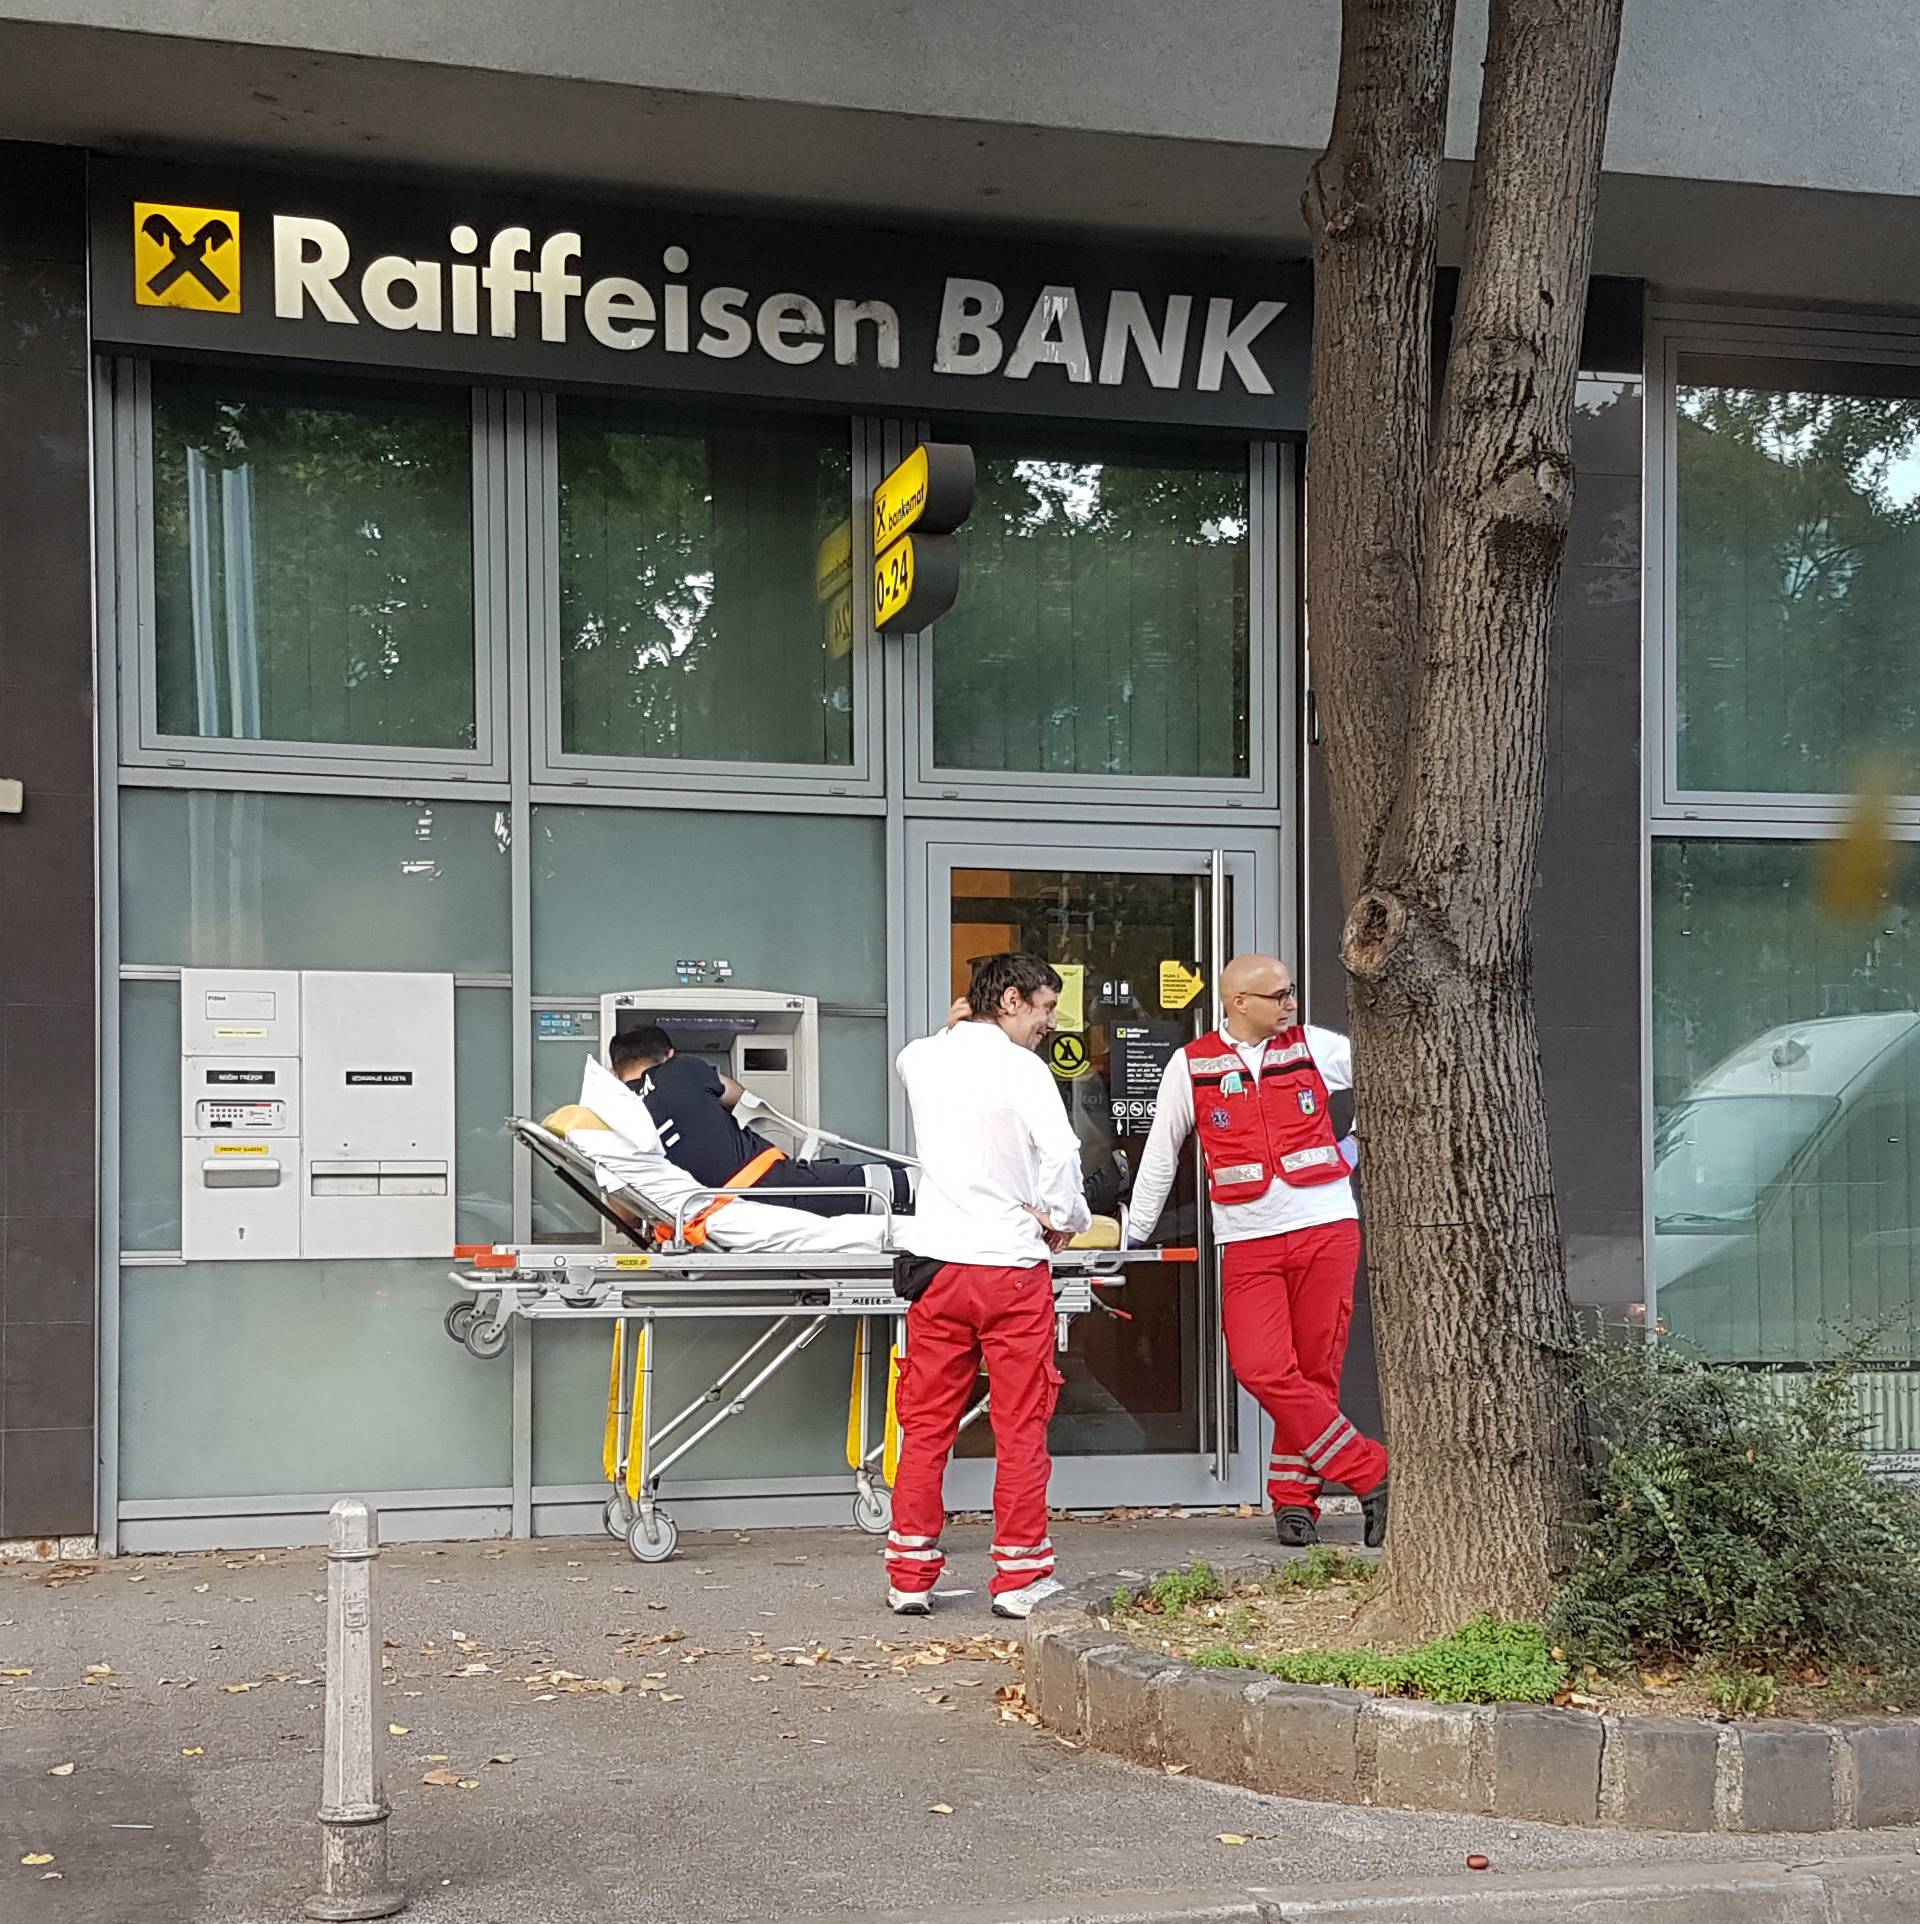 Hitna je 'dovezla' pacijenta do bankomata da podigne novac